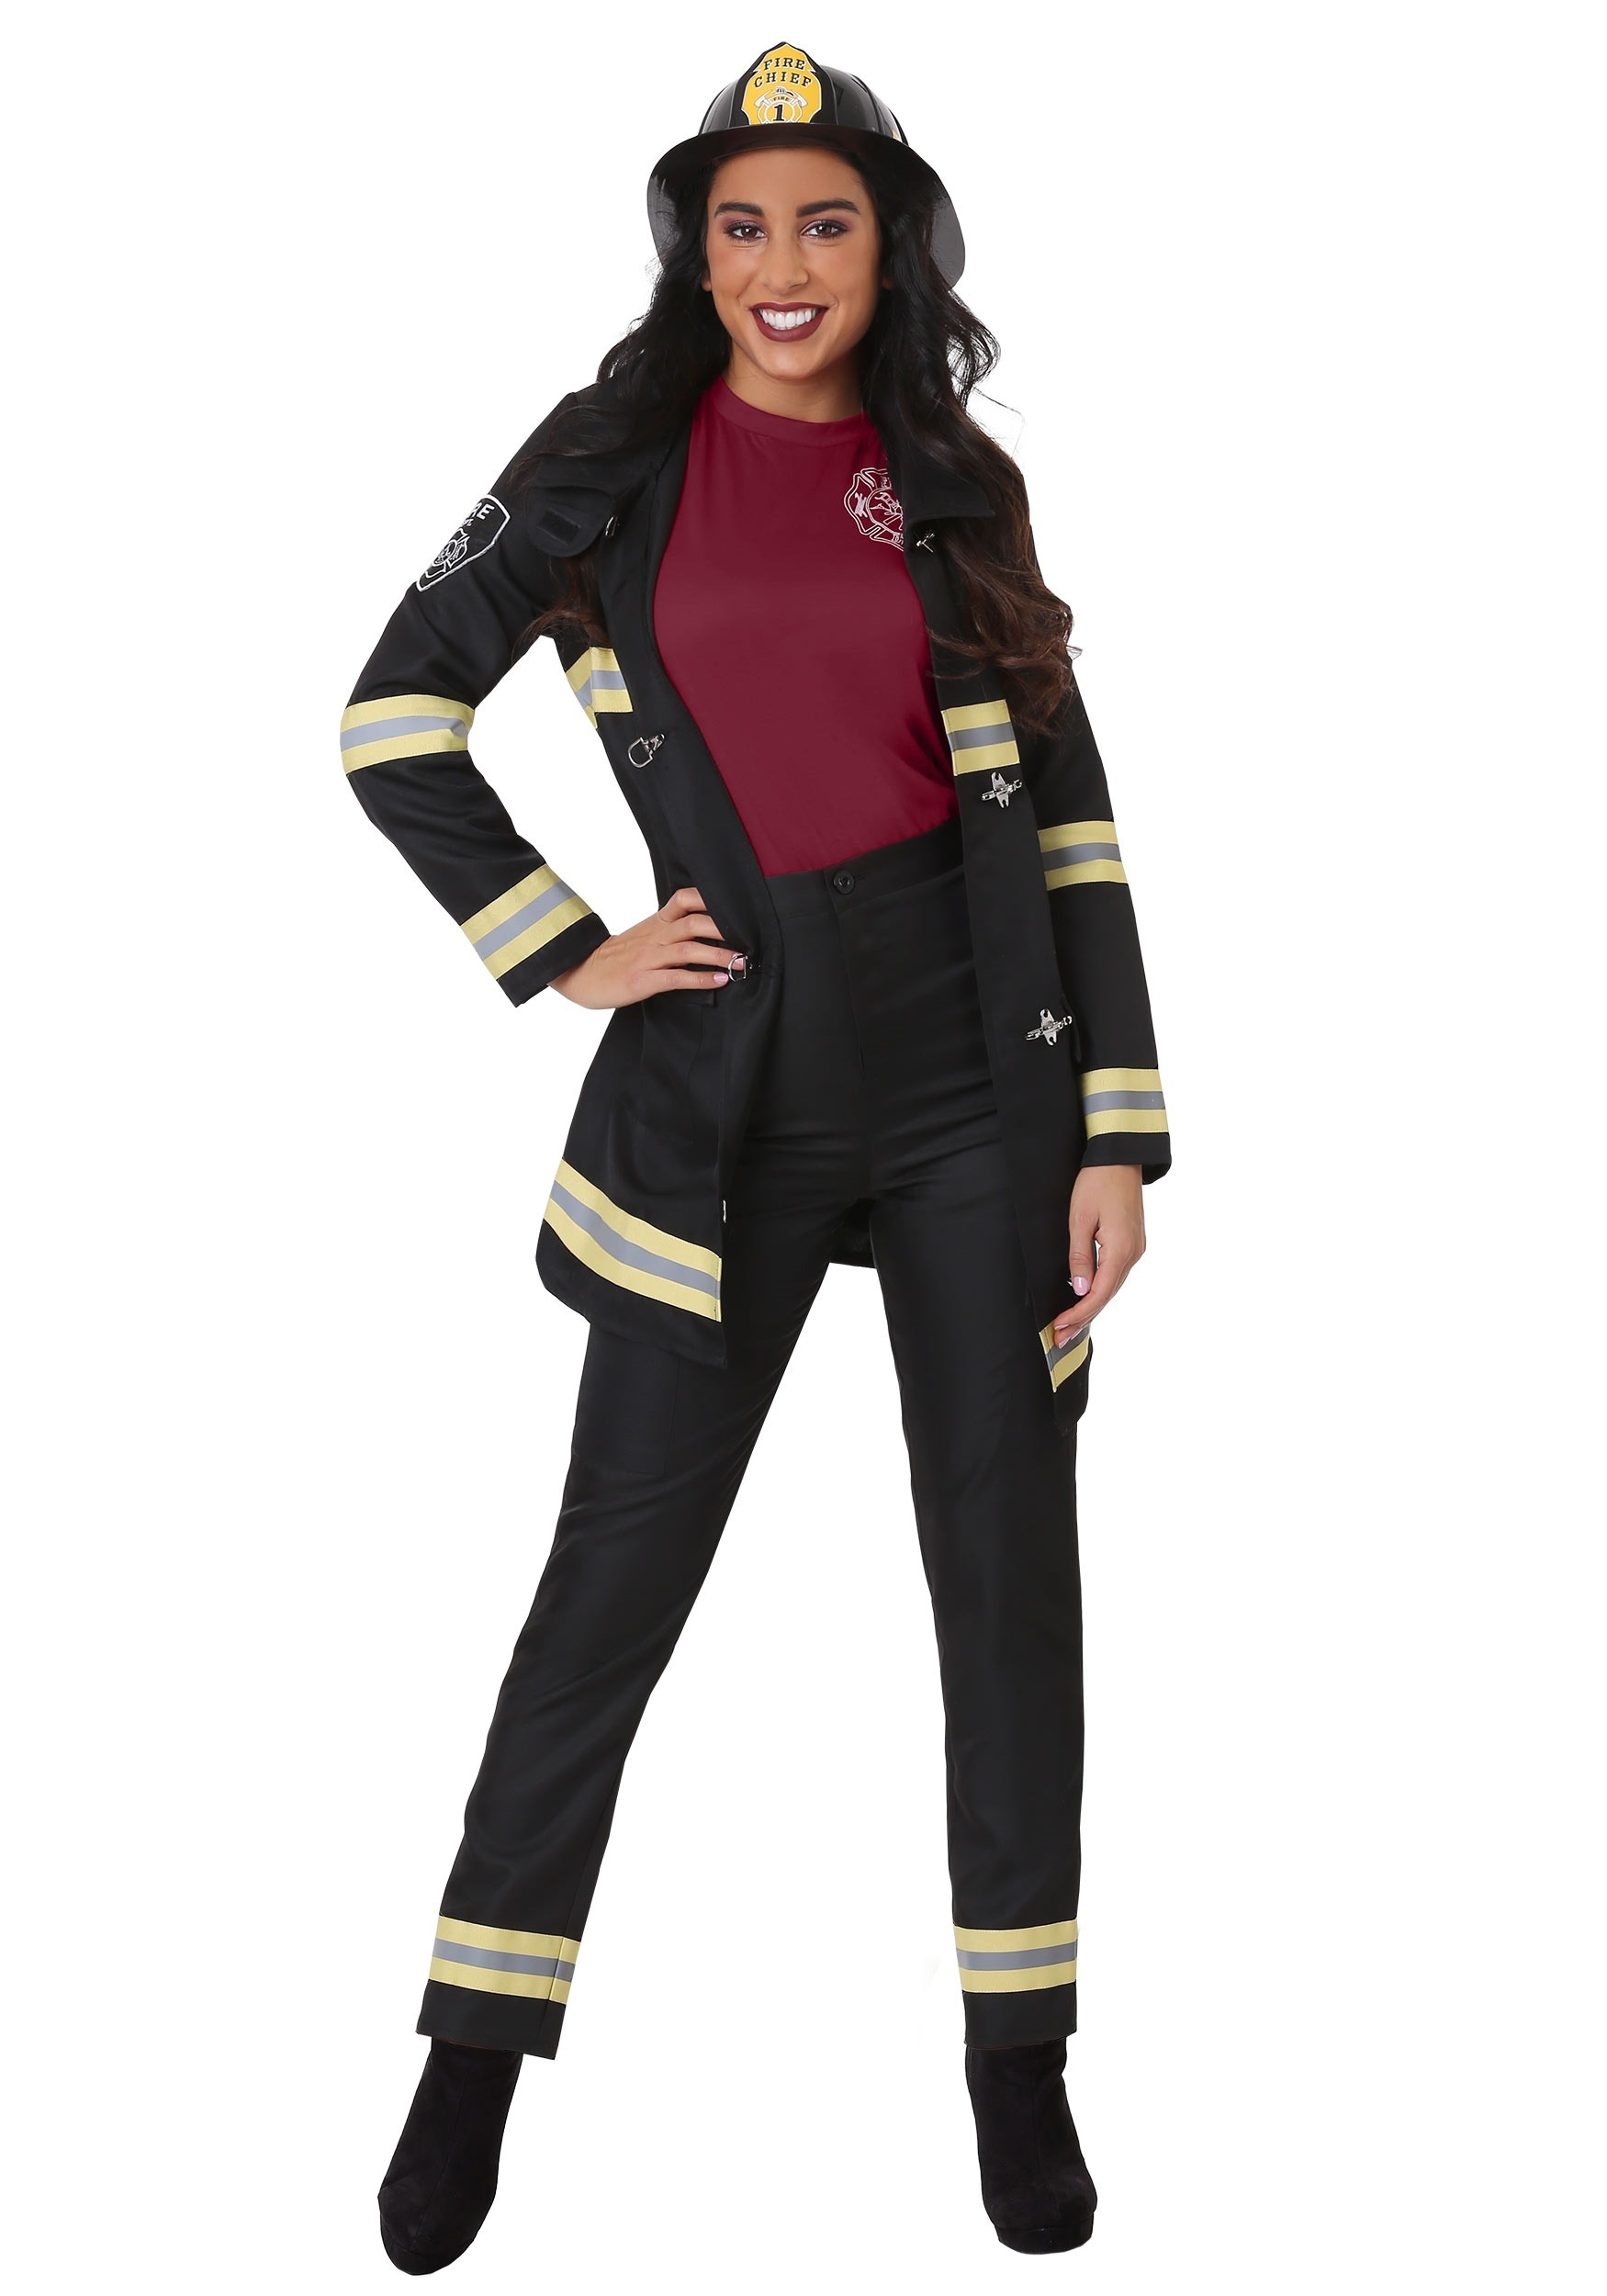 Photos - Fancy Dress FUN Costumes Plus Size Black Firefighter Costume for Women Black/Yello